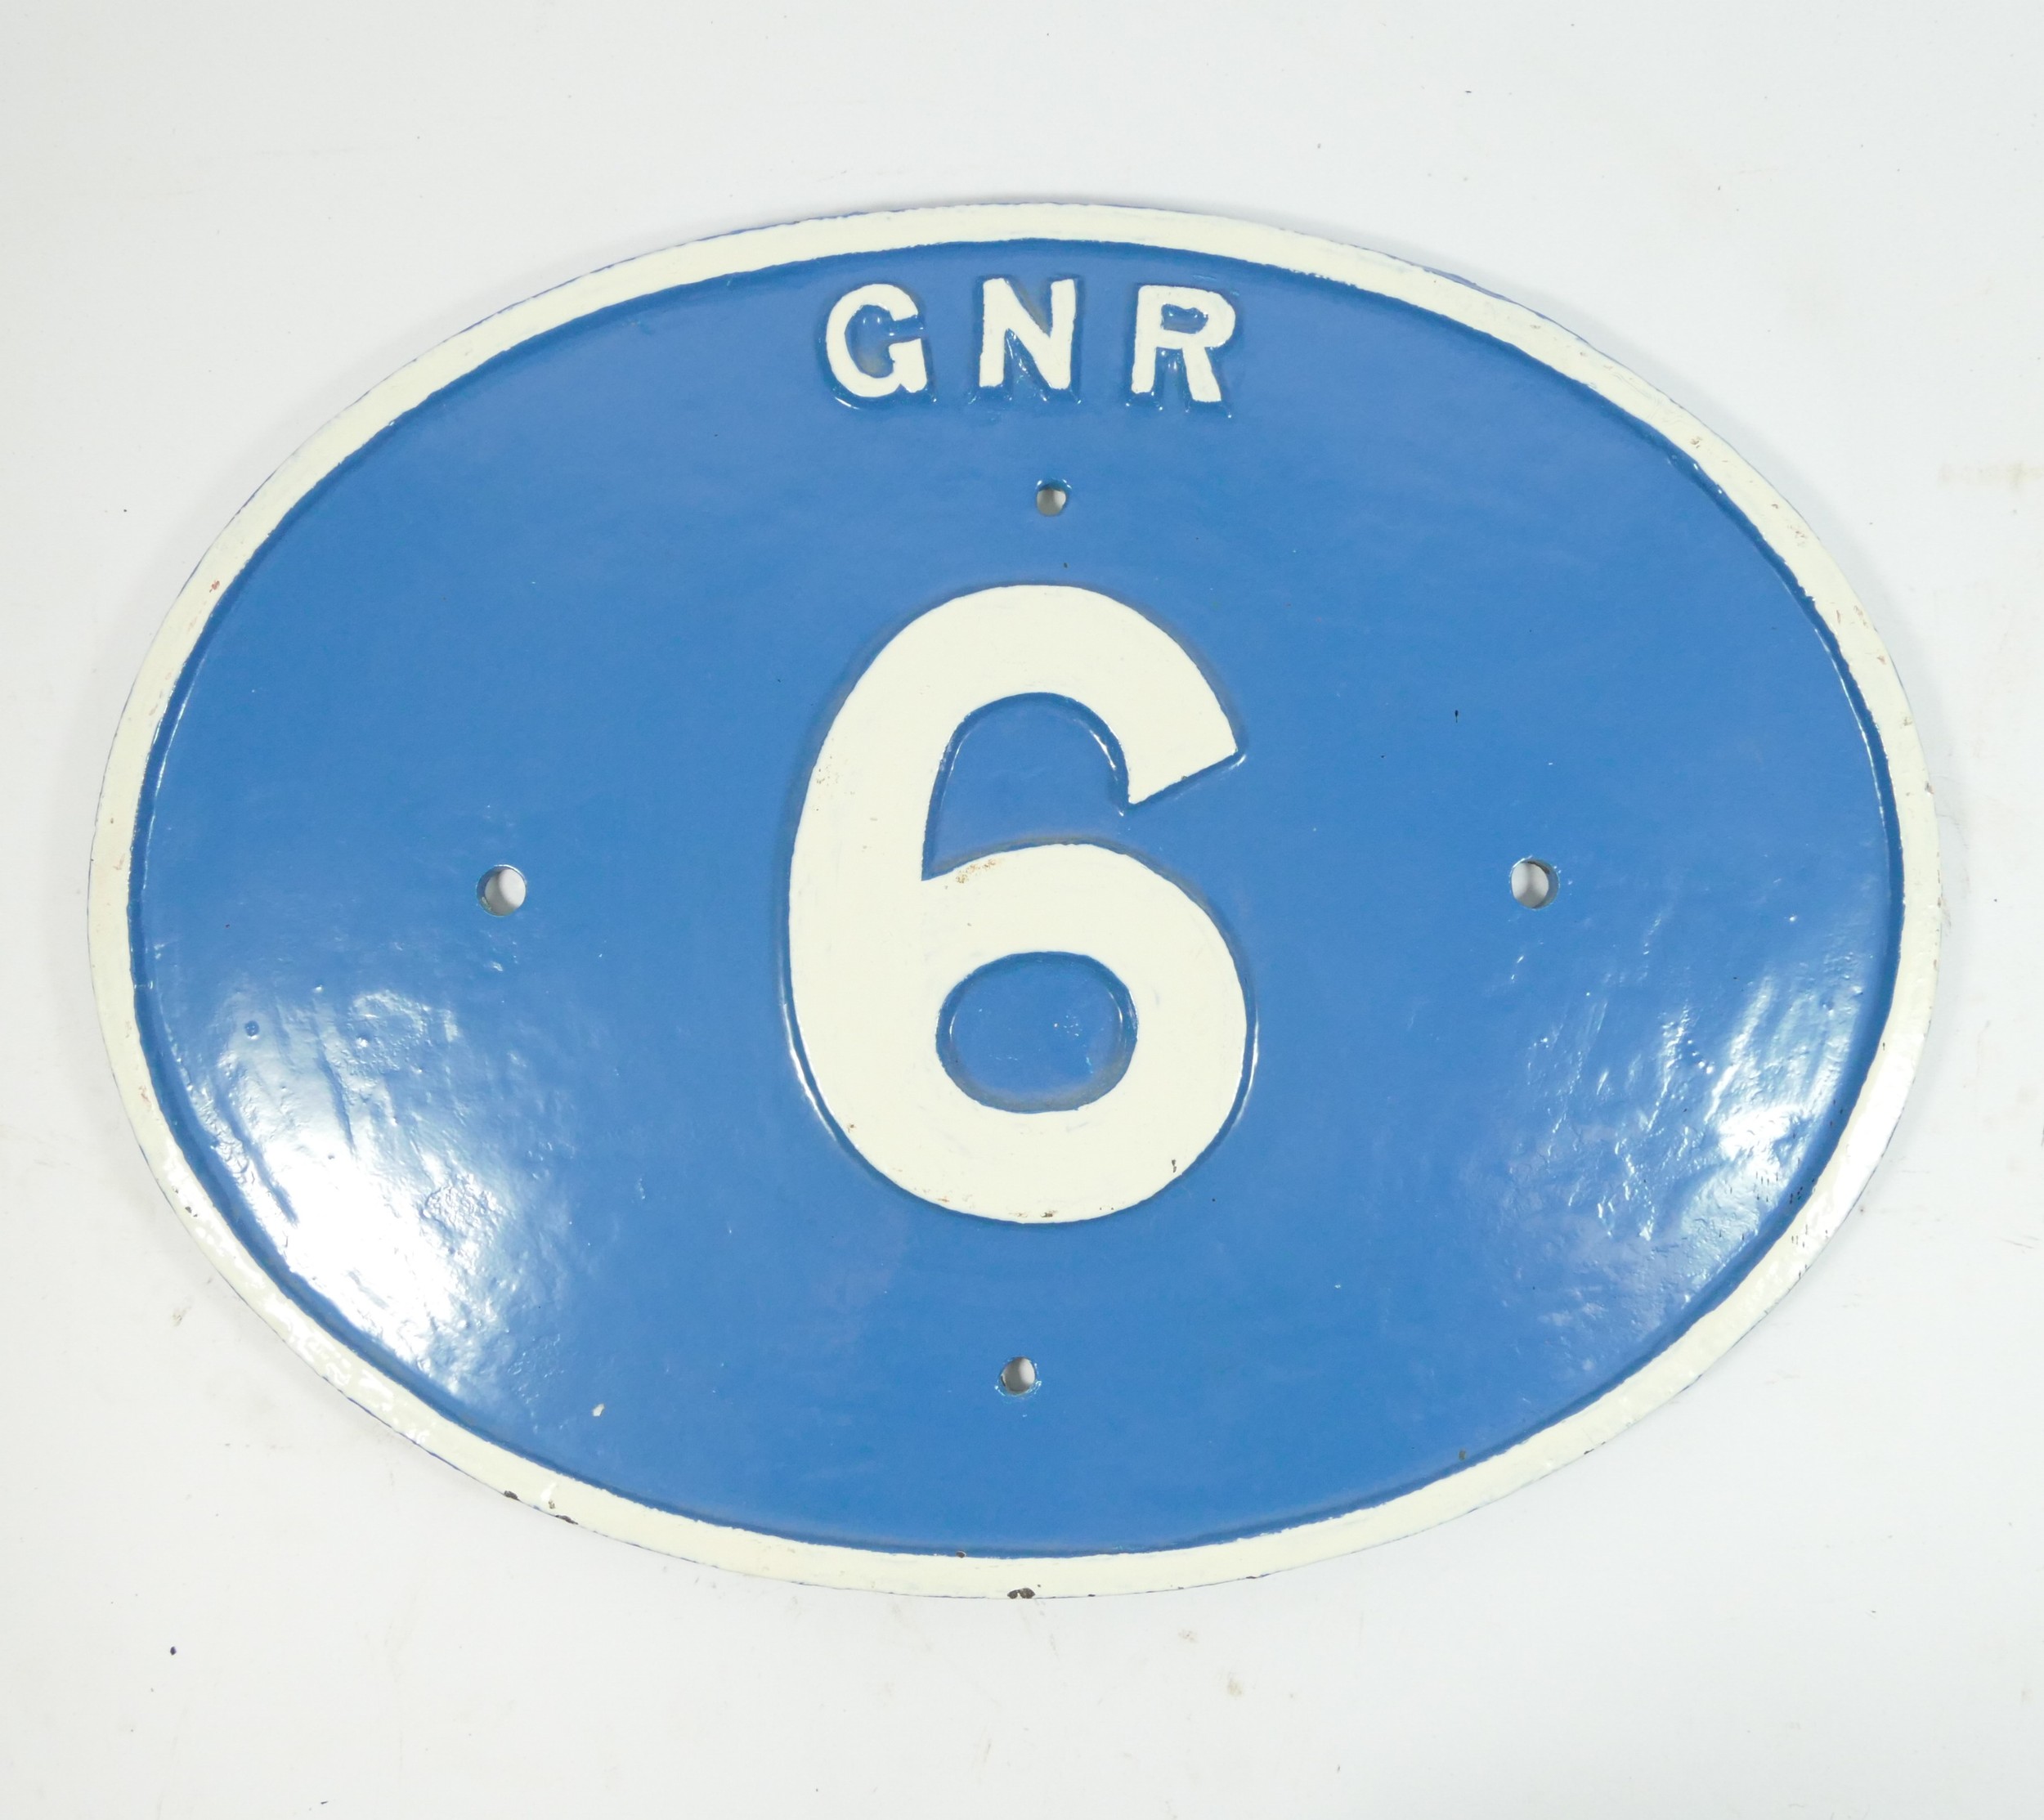 Oval cast iron railway bridge plate, GNR 6, 43 x 32cm.